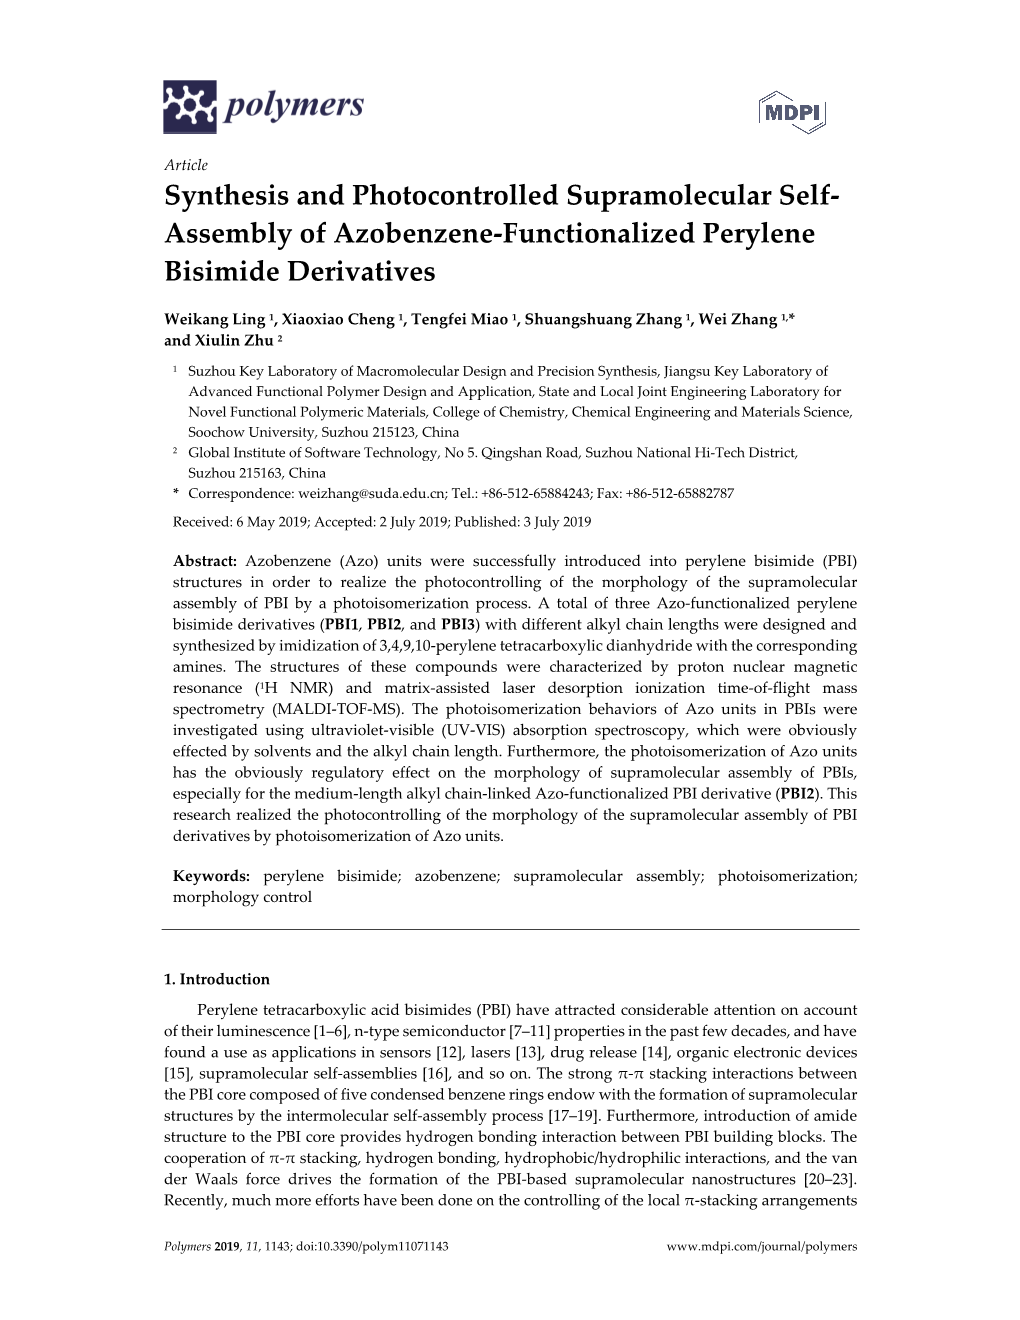 Synthesis and Photocontrolled Supramolecular Self- Assembly of Azobenzene-Functionalized Perylene Bisimide Derivatives